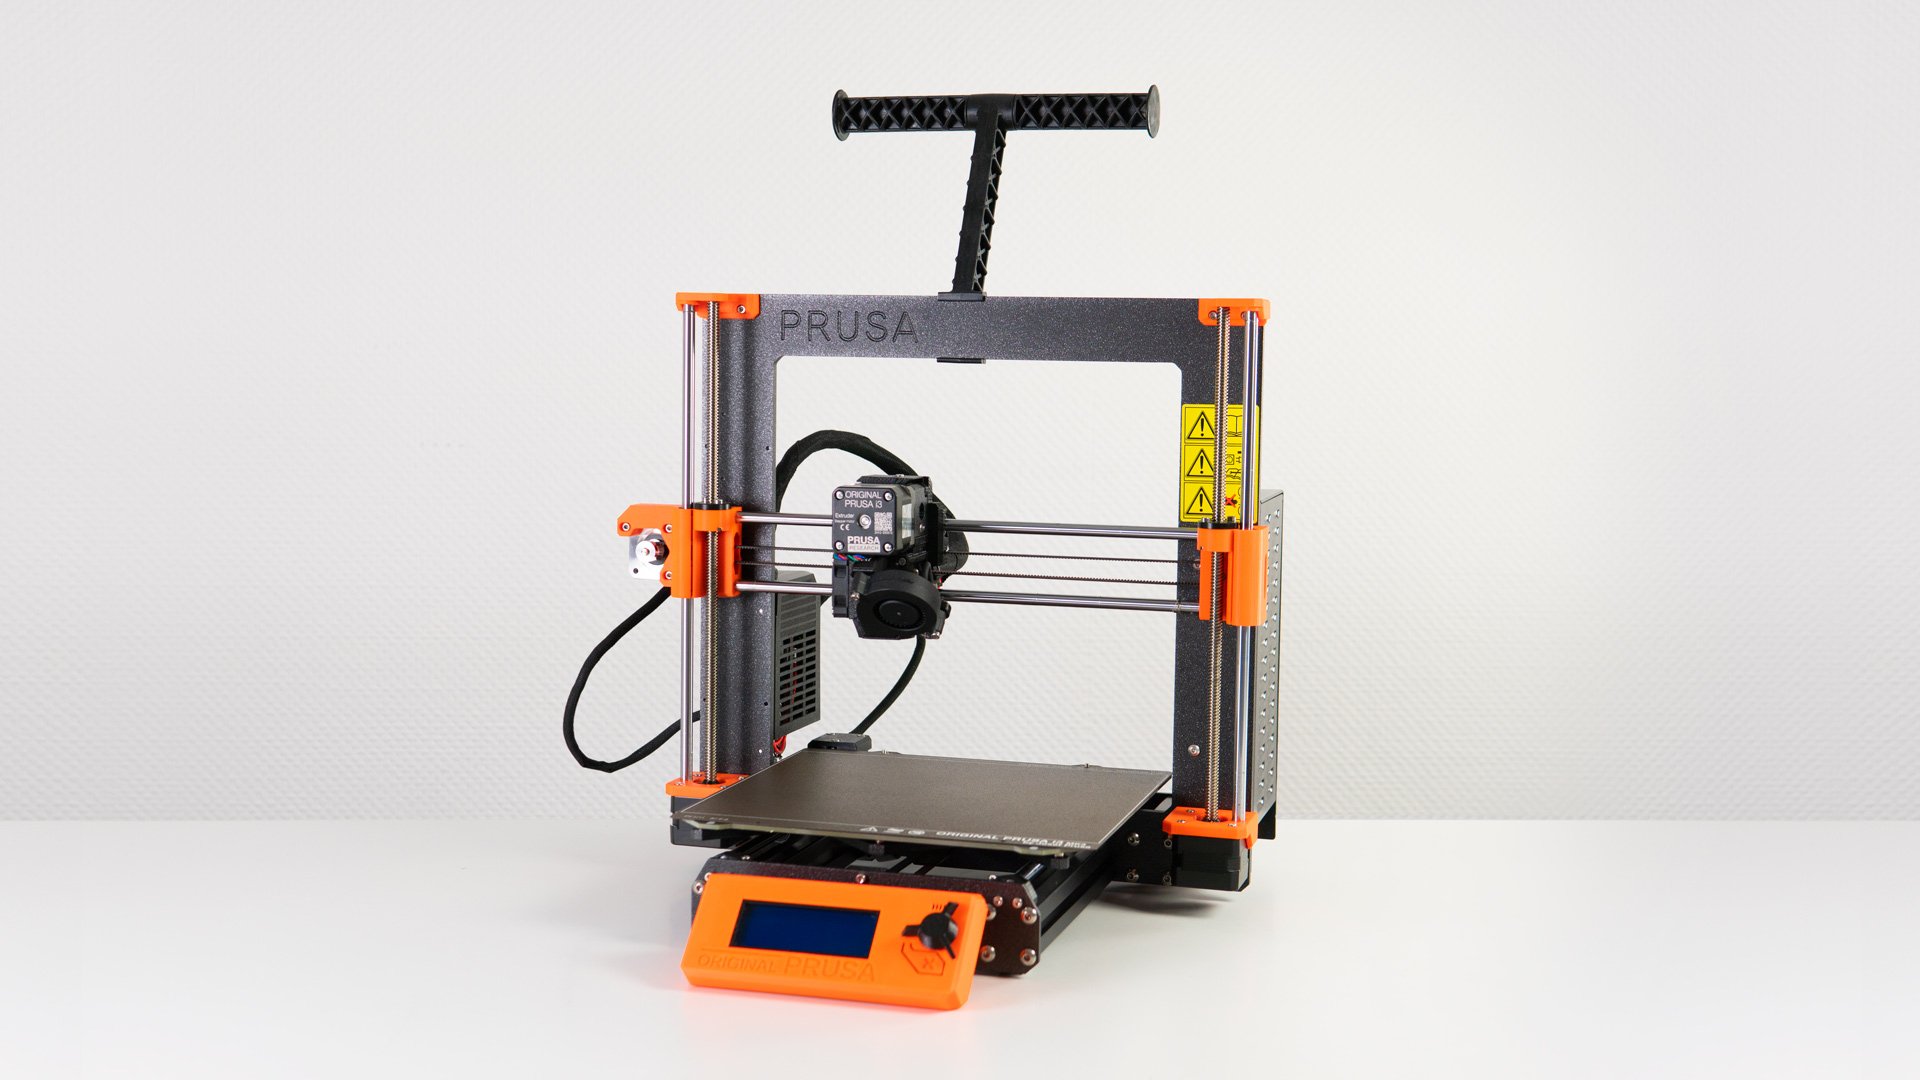 Original Prusa Review: Best 3D Printer Under All3DP